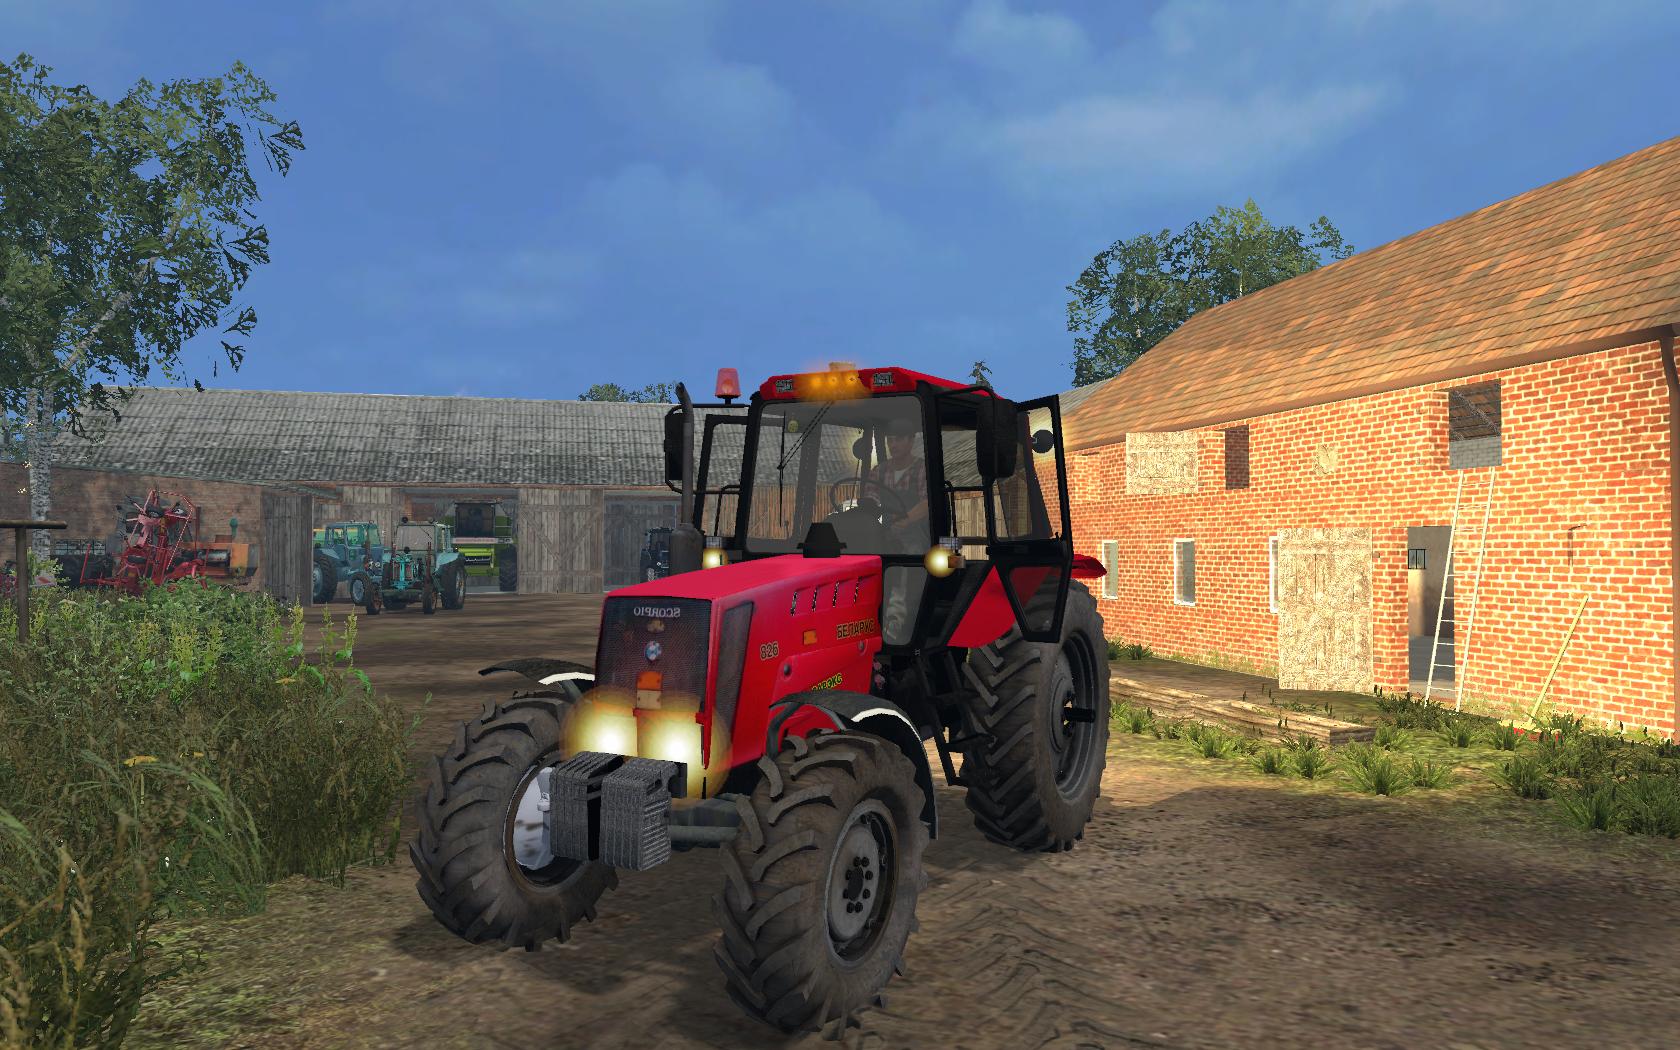 BELARUS 826 V1 Mod - Farming Simulator 2015 / 15 mod